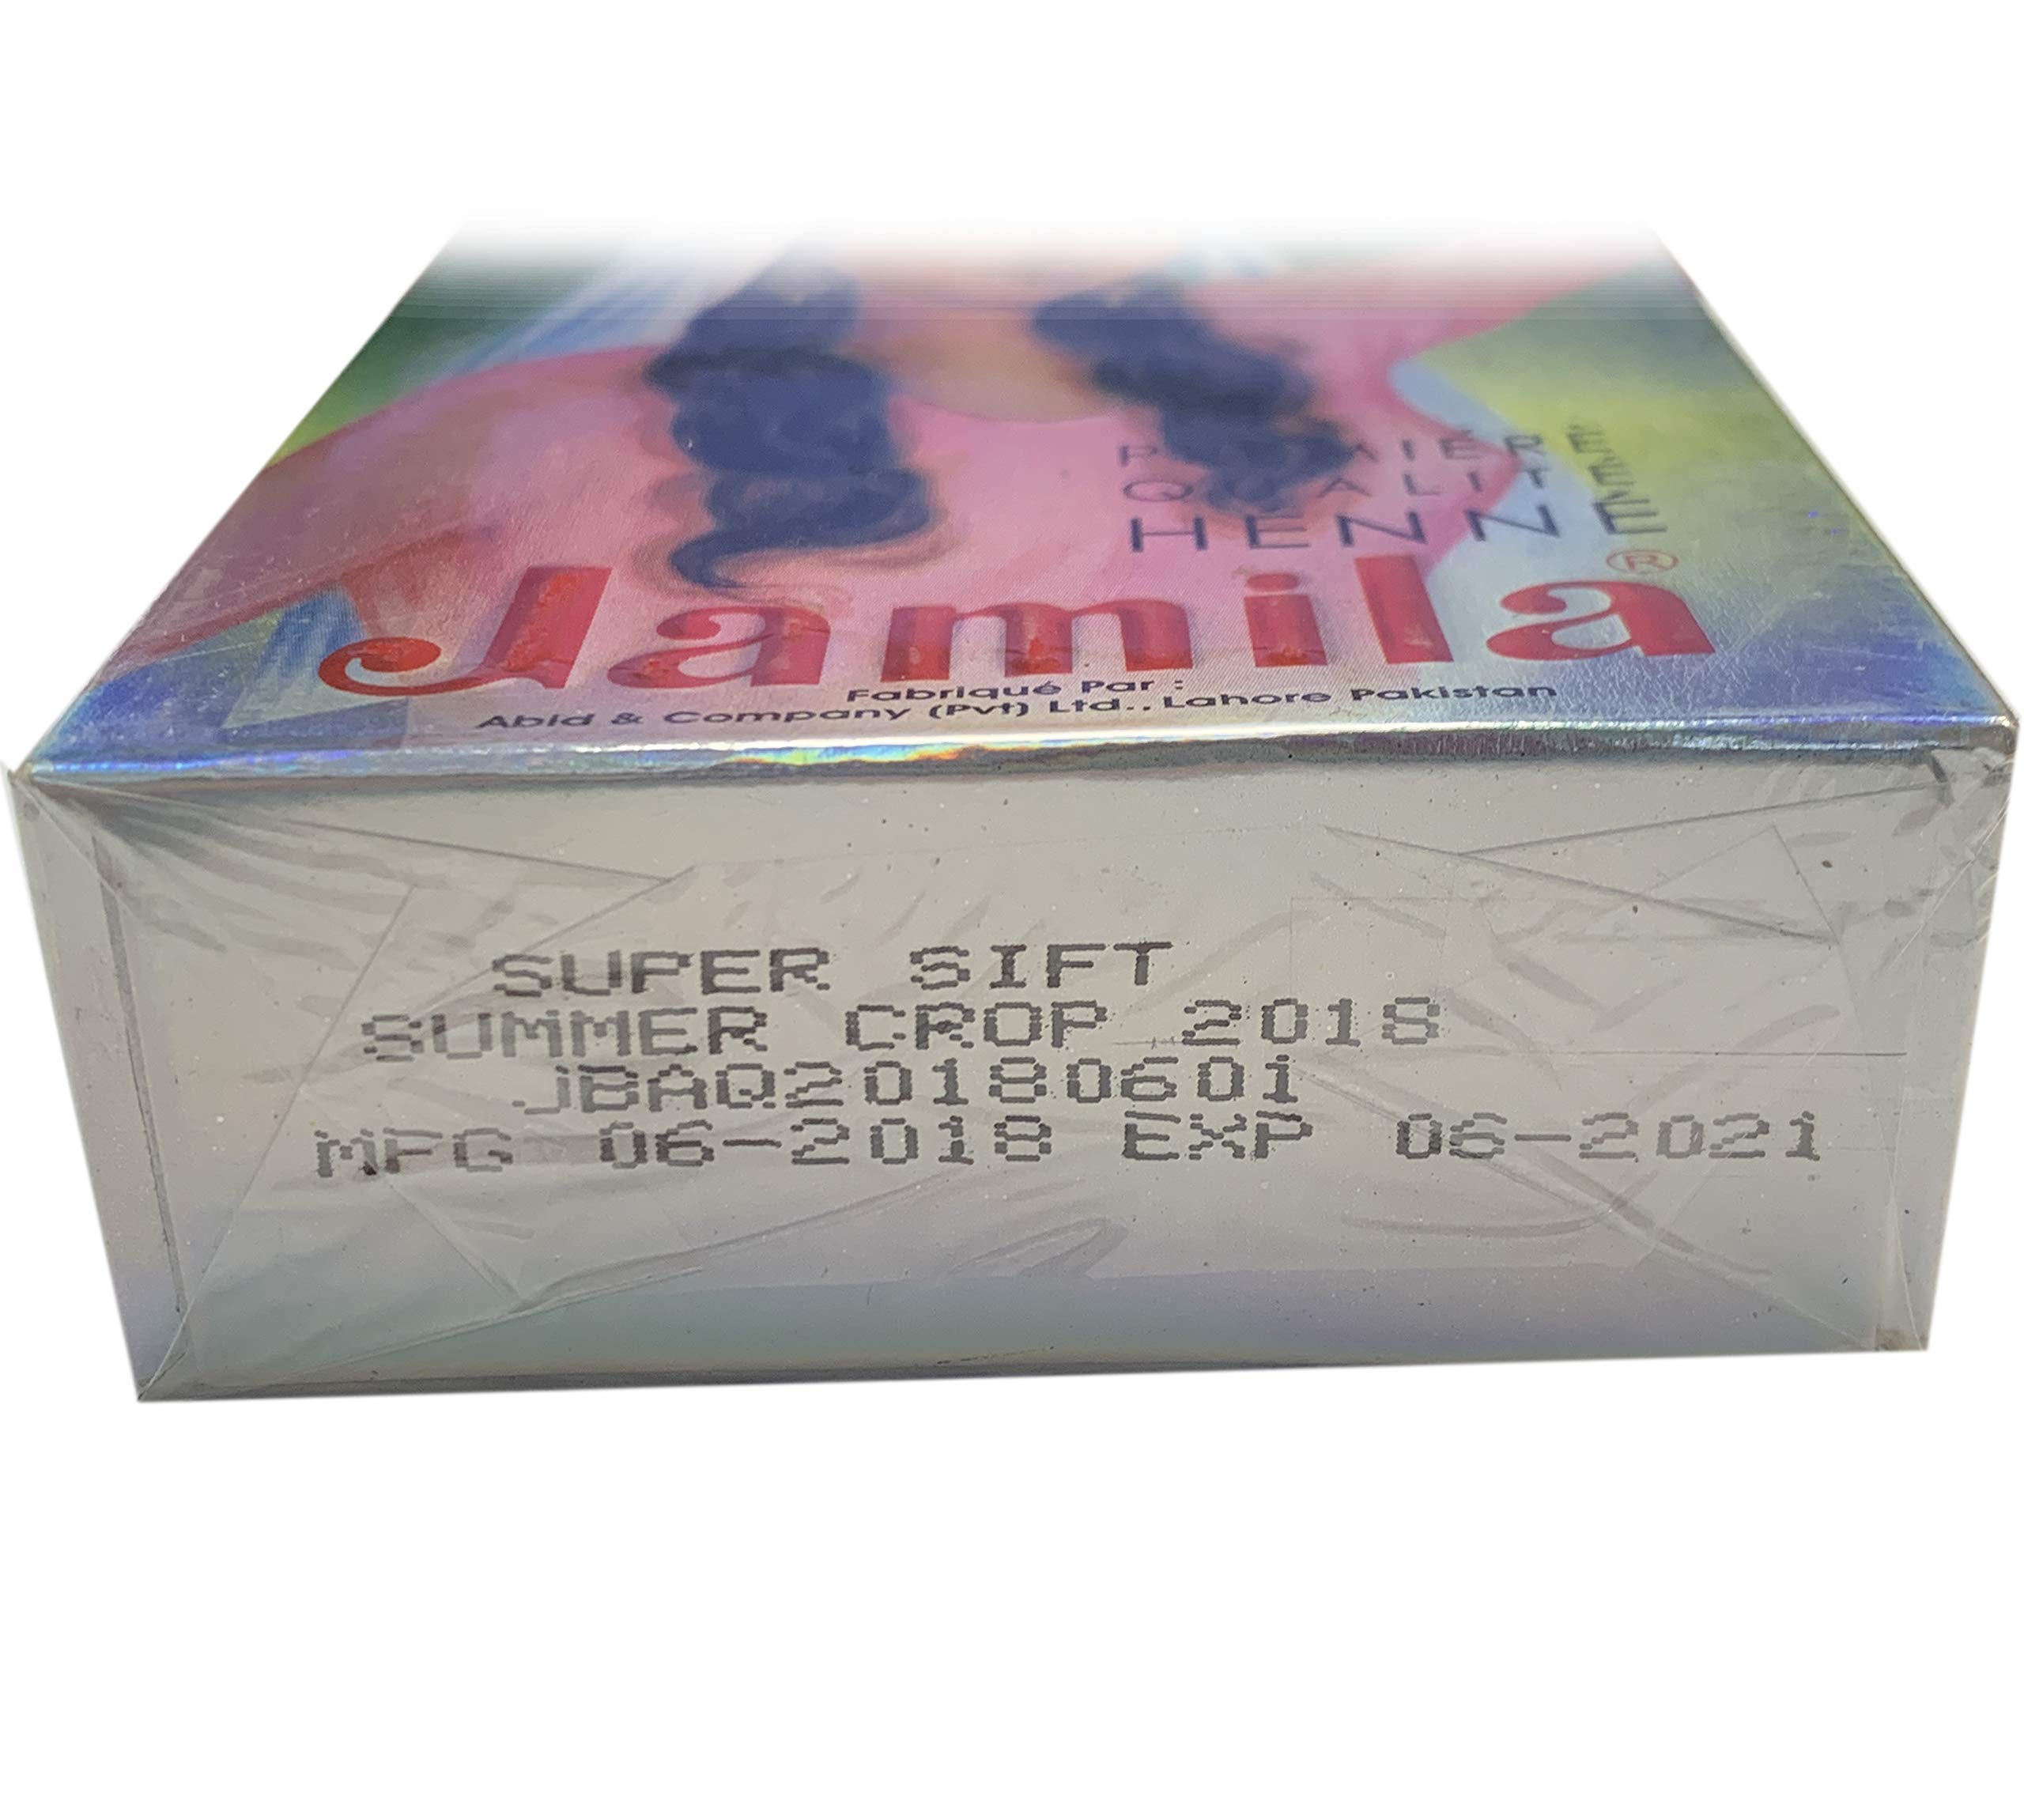 Jamila Henna Powder, 100 grams